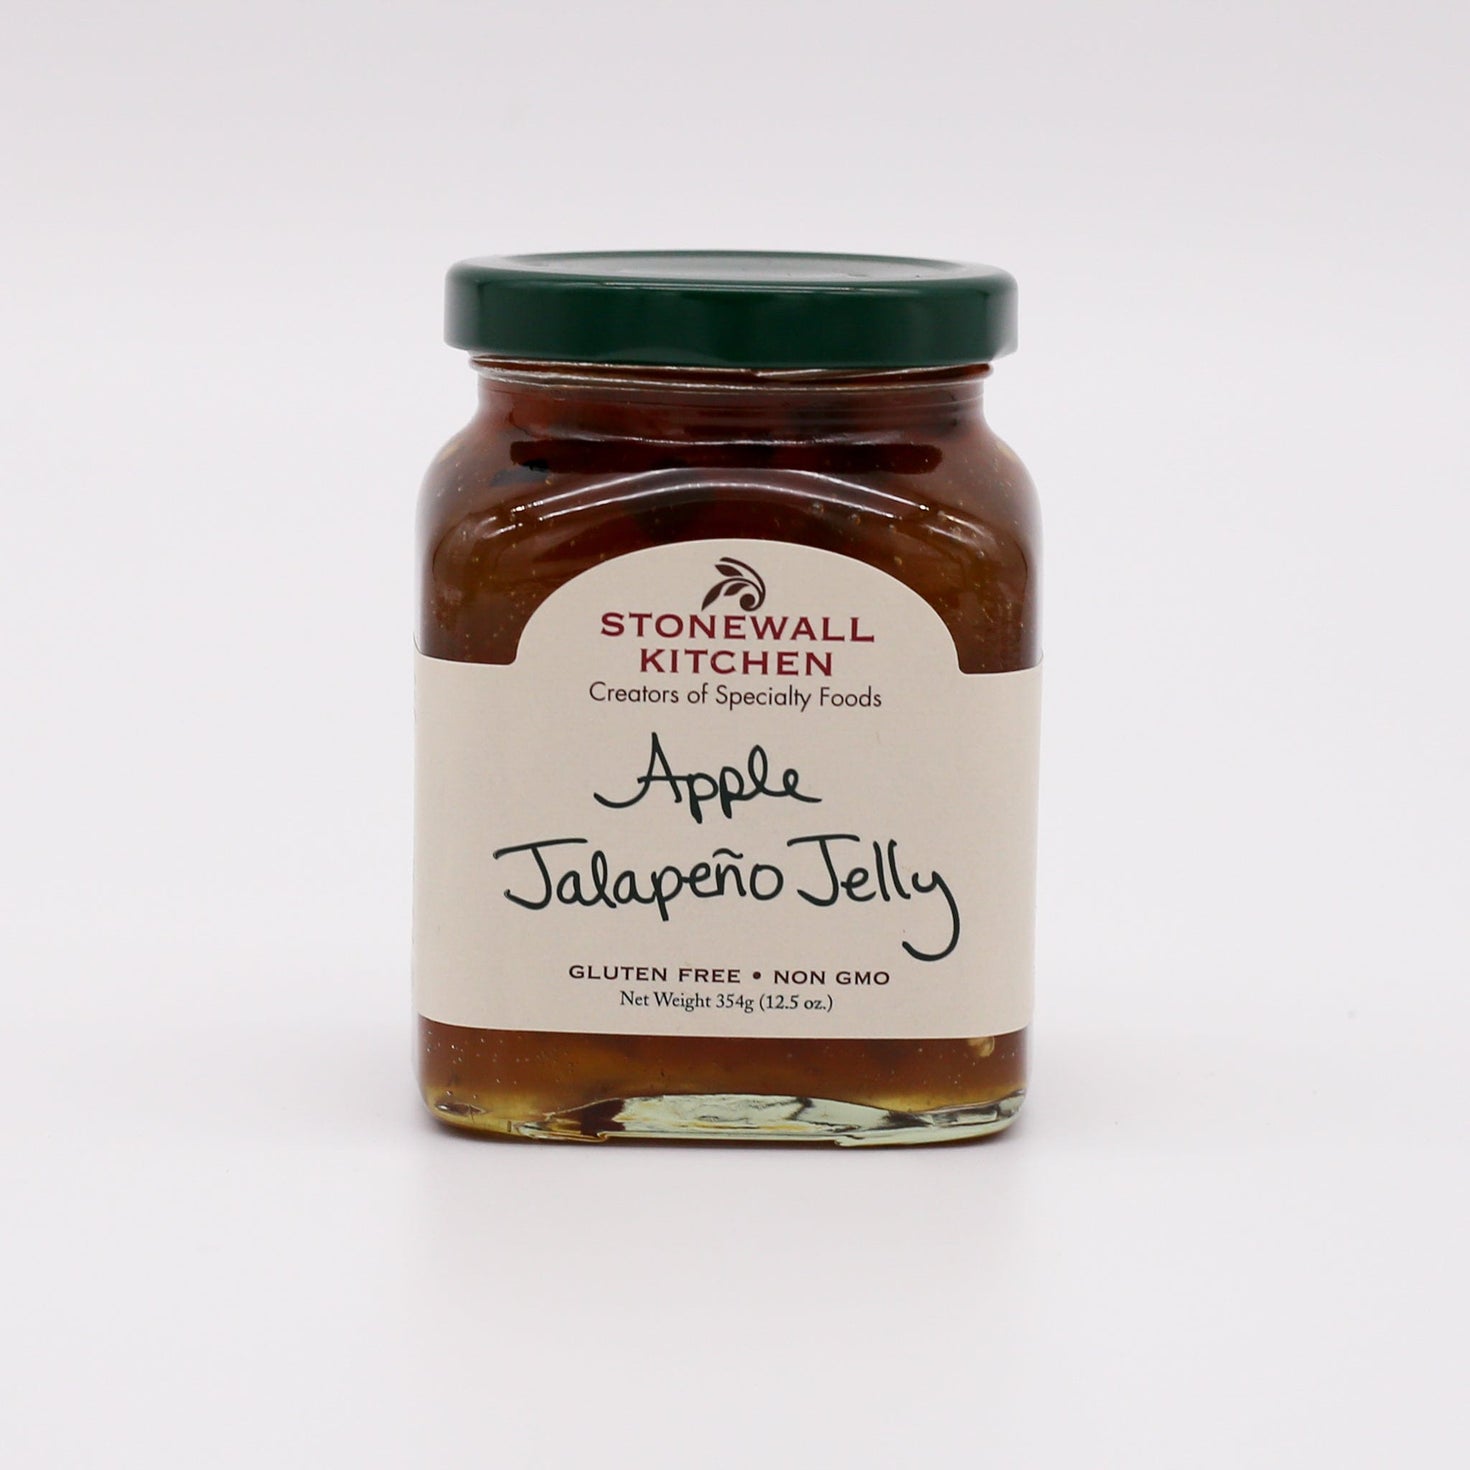 Stonewall Kitchen Jelly: Apple Jalapeno 12.5oz